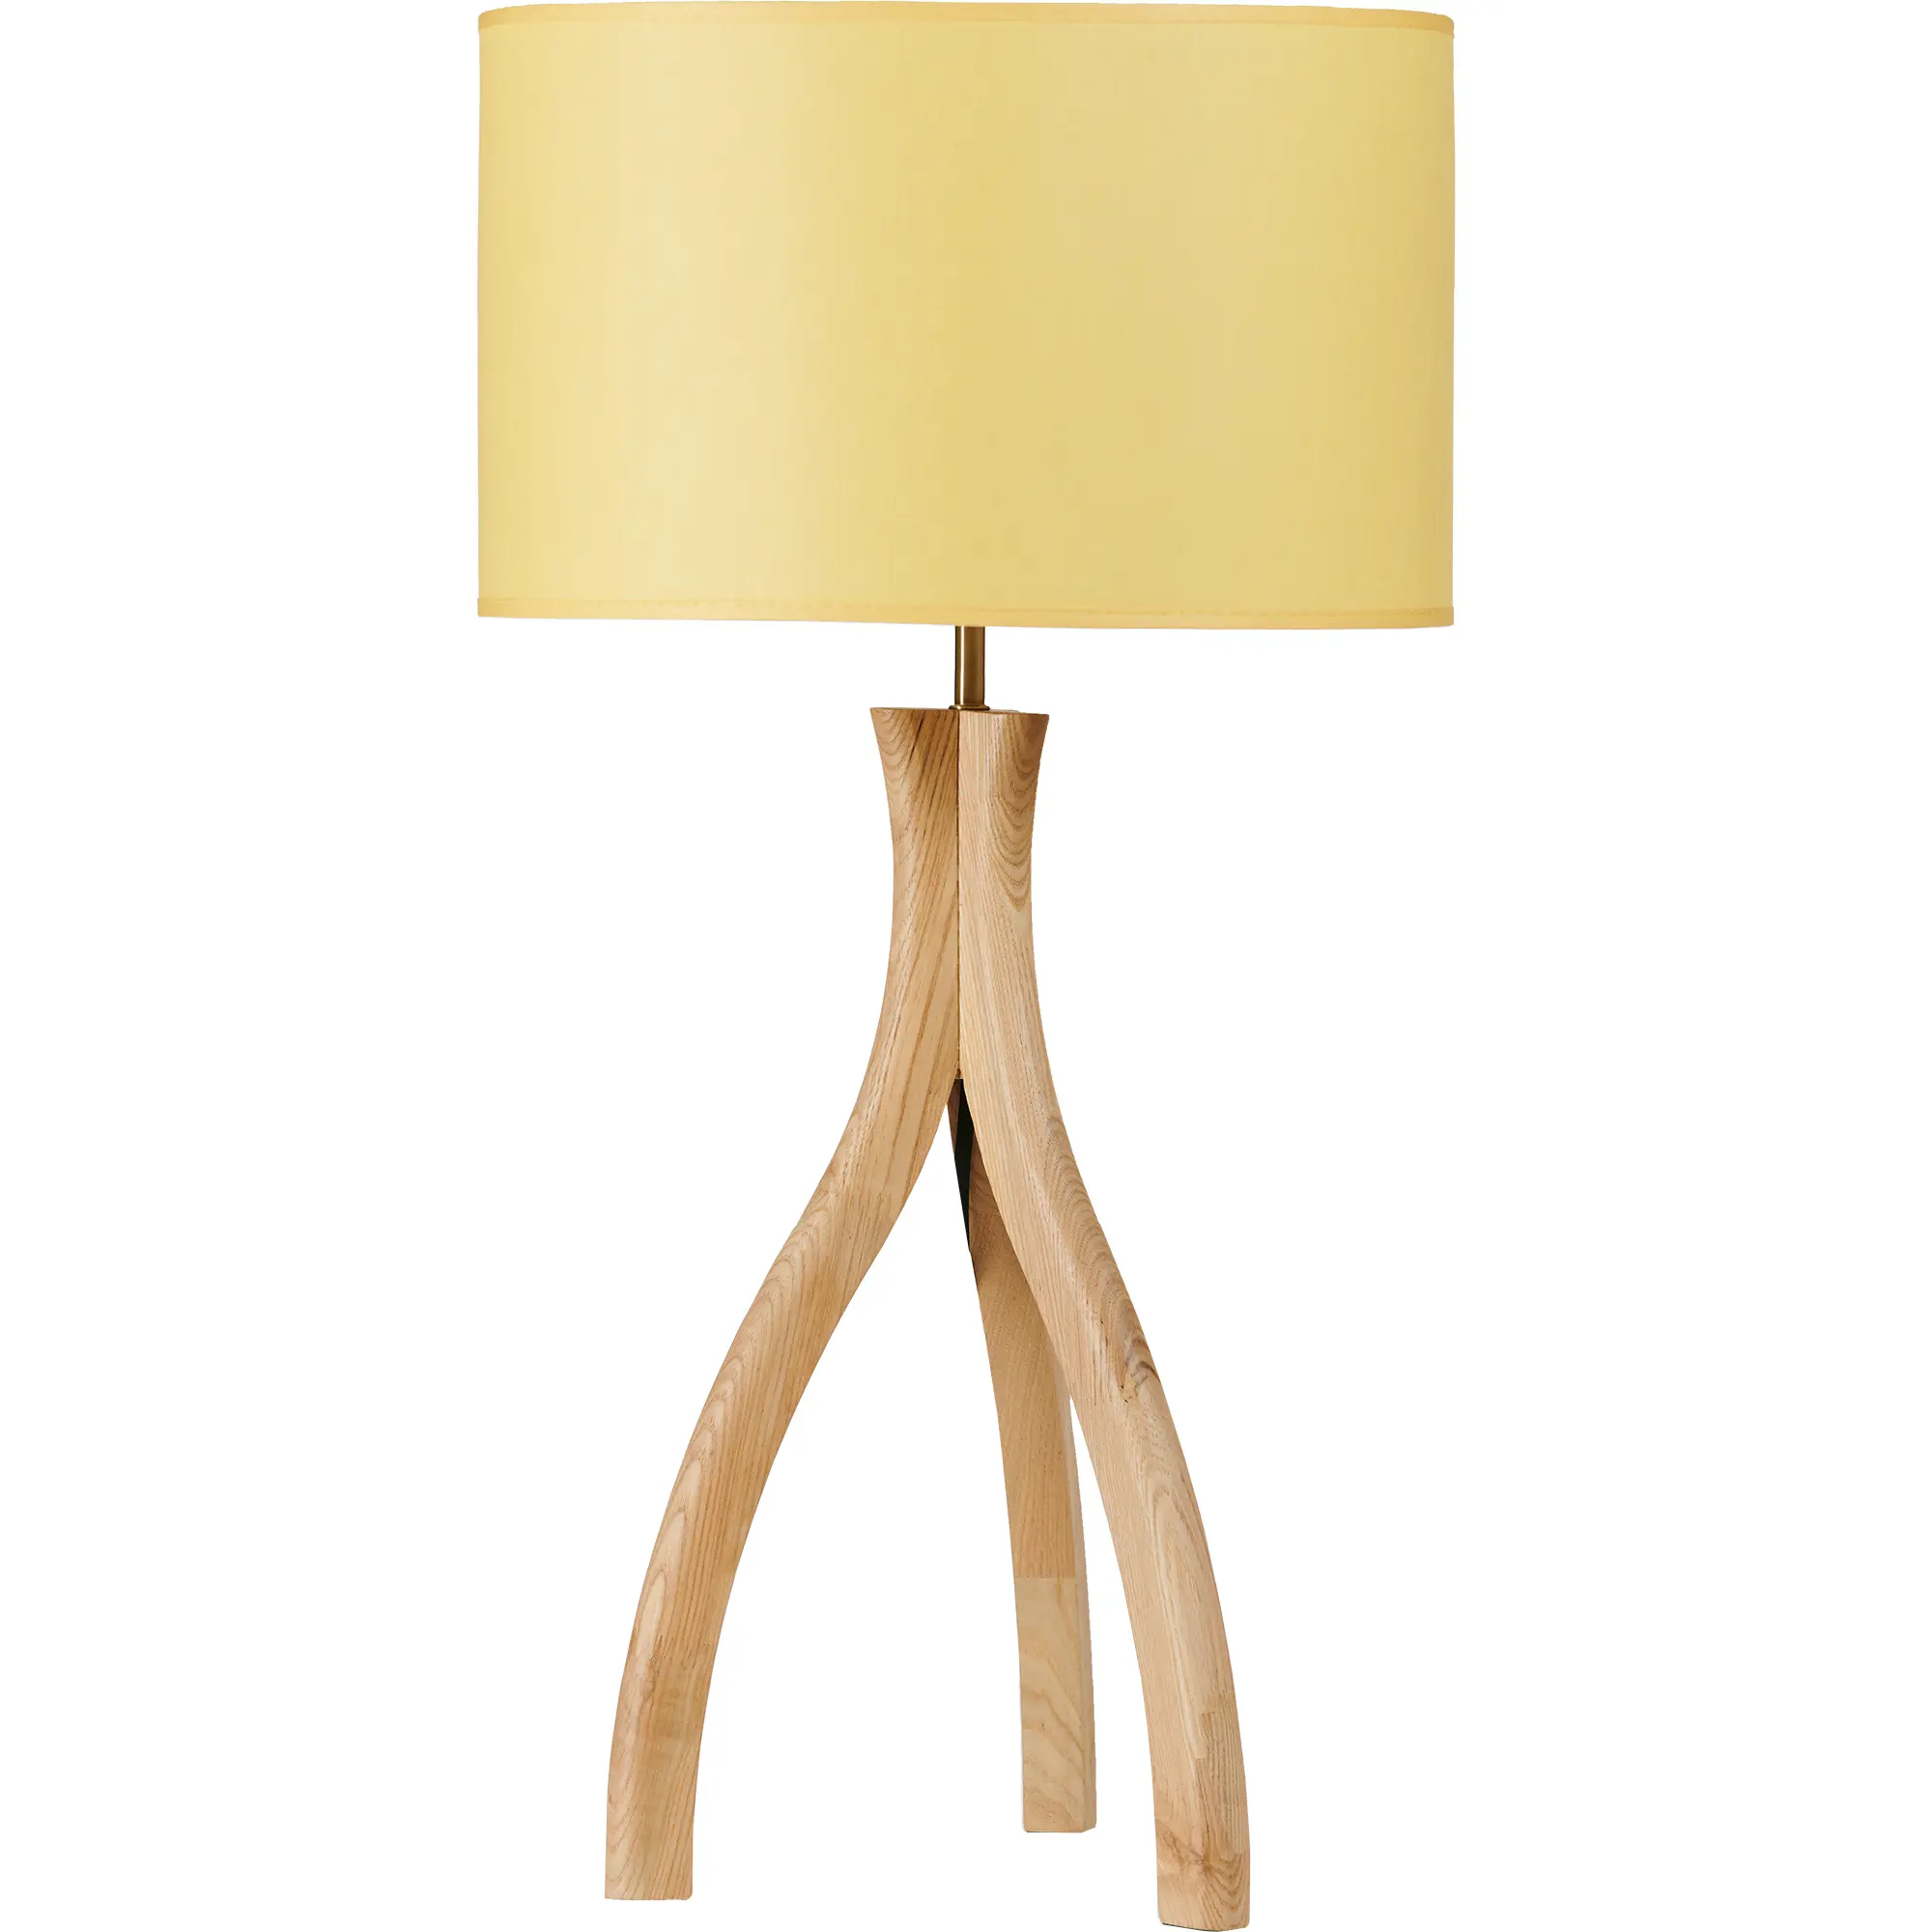 Holz-Tischlampe Skandinavia aus Esche in gelb